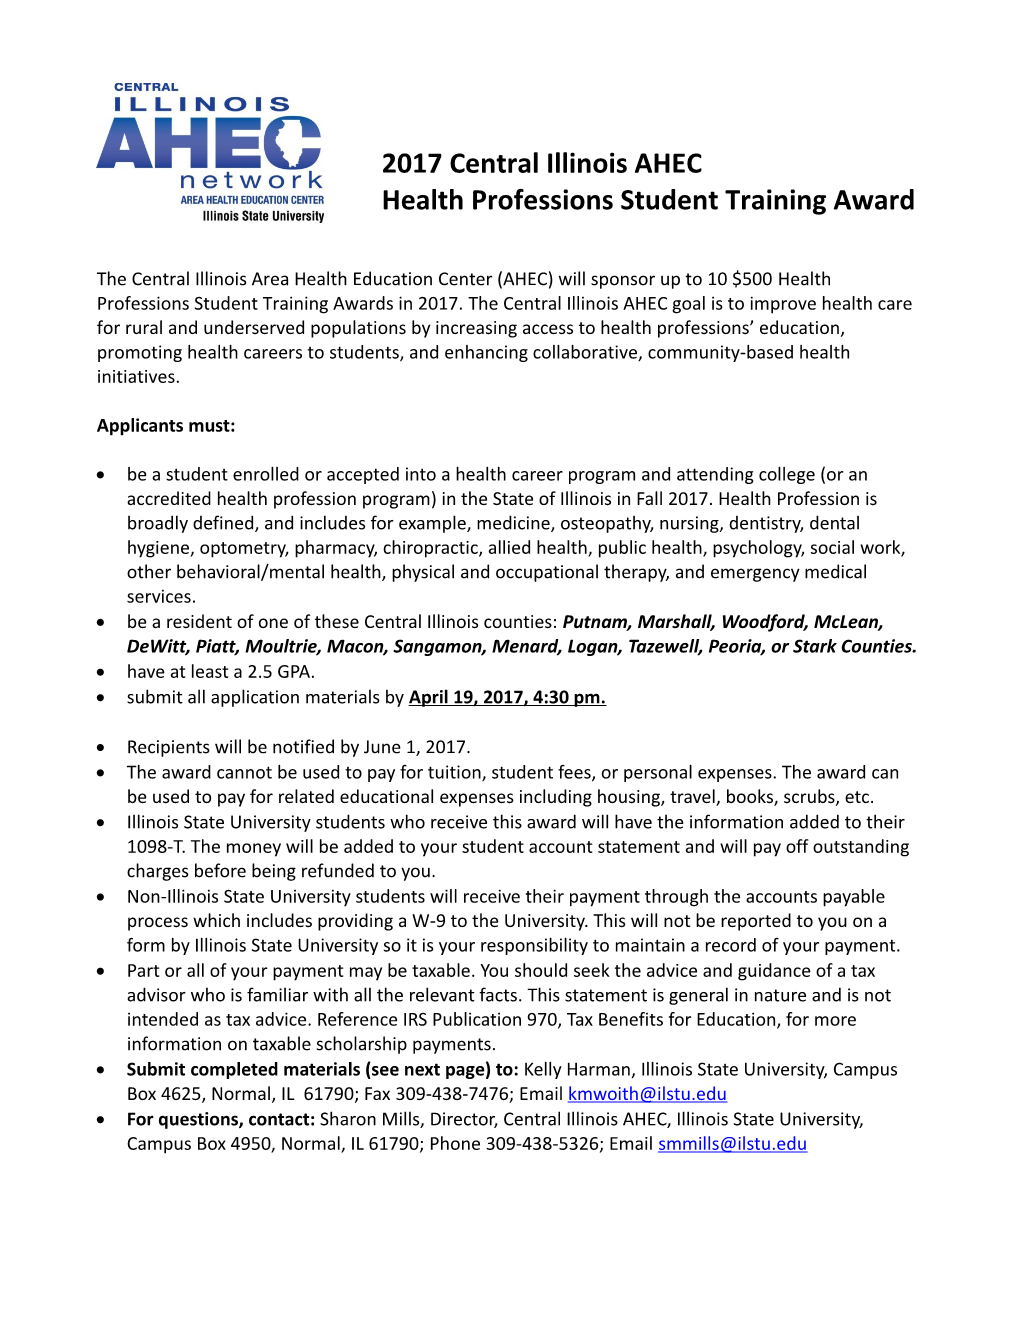 Health Professions Student Training Award